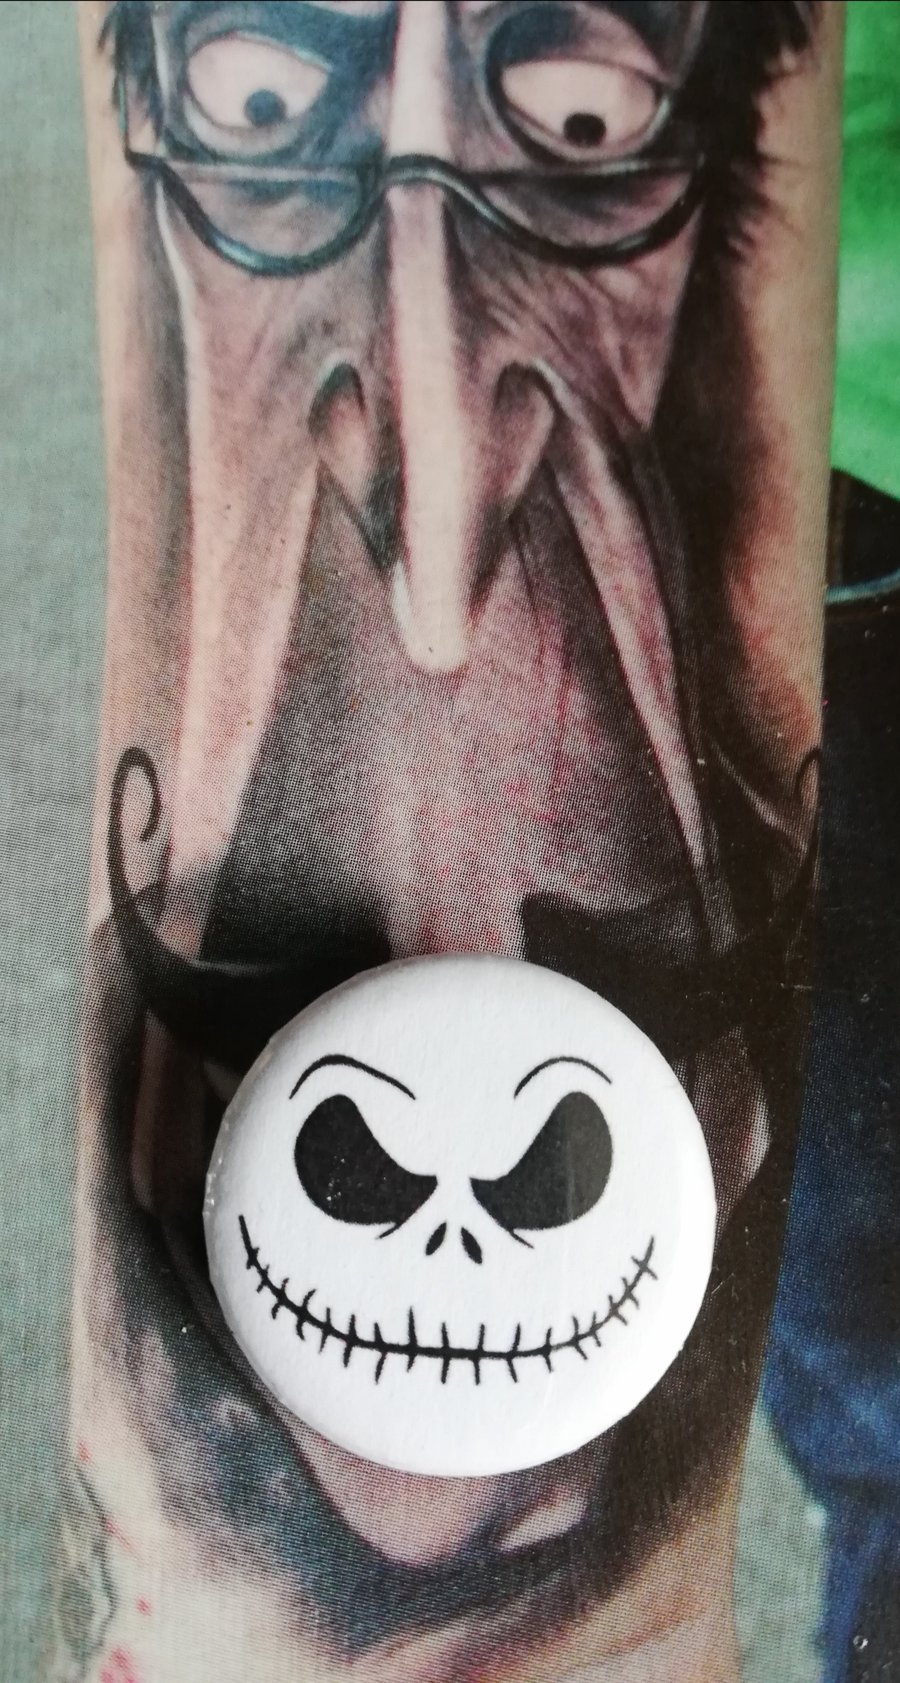 Halloween Jack - White 25mm Button Badge - Free Postage!